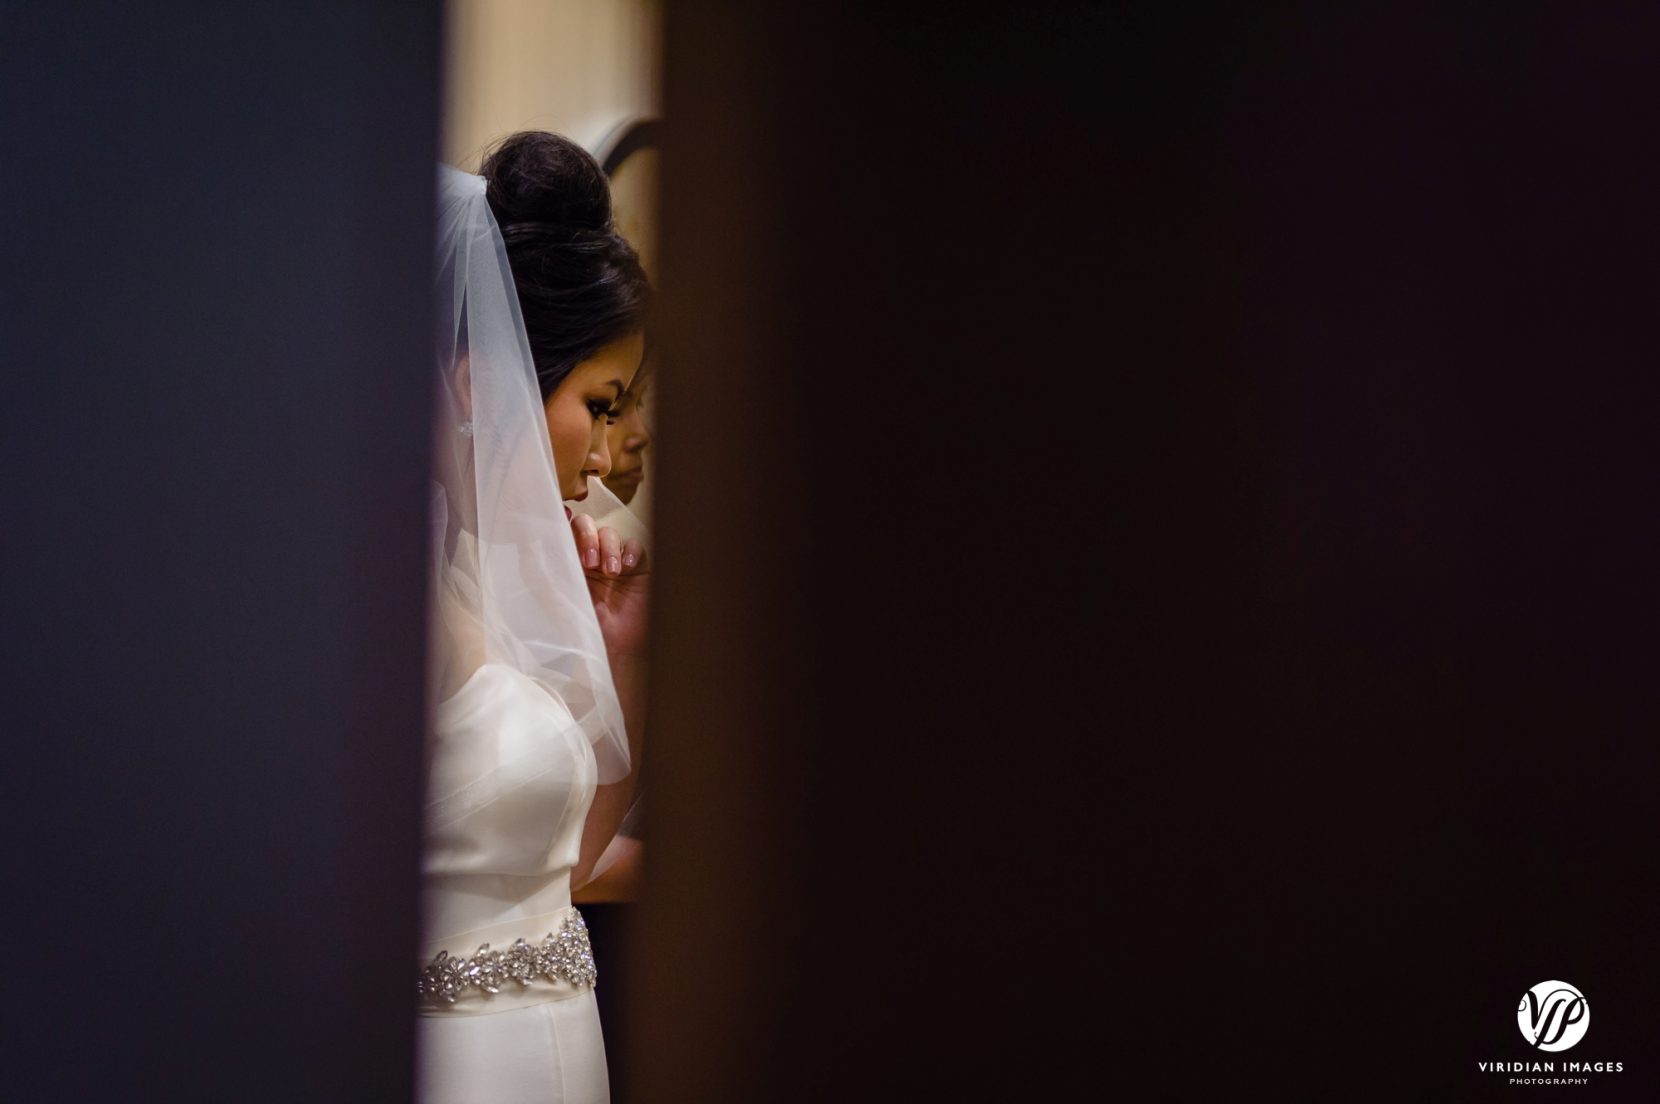 bride through crack of door getting ready before wedding